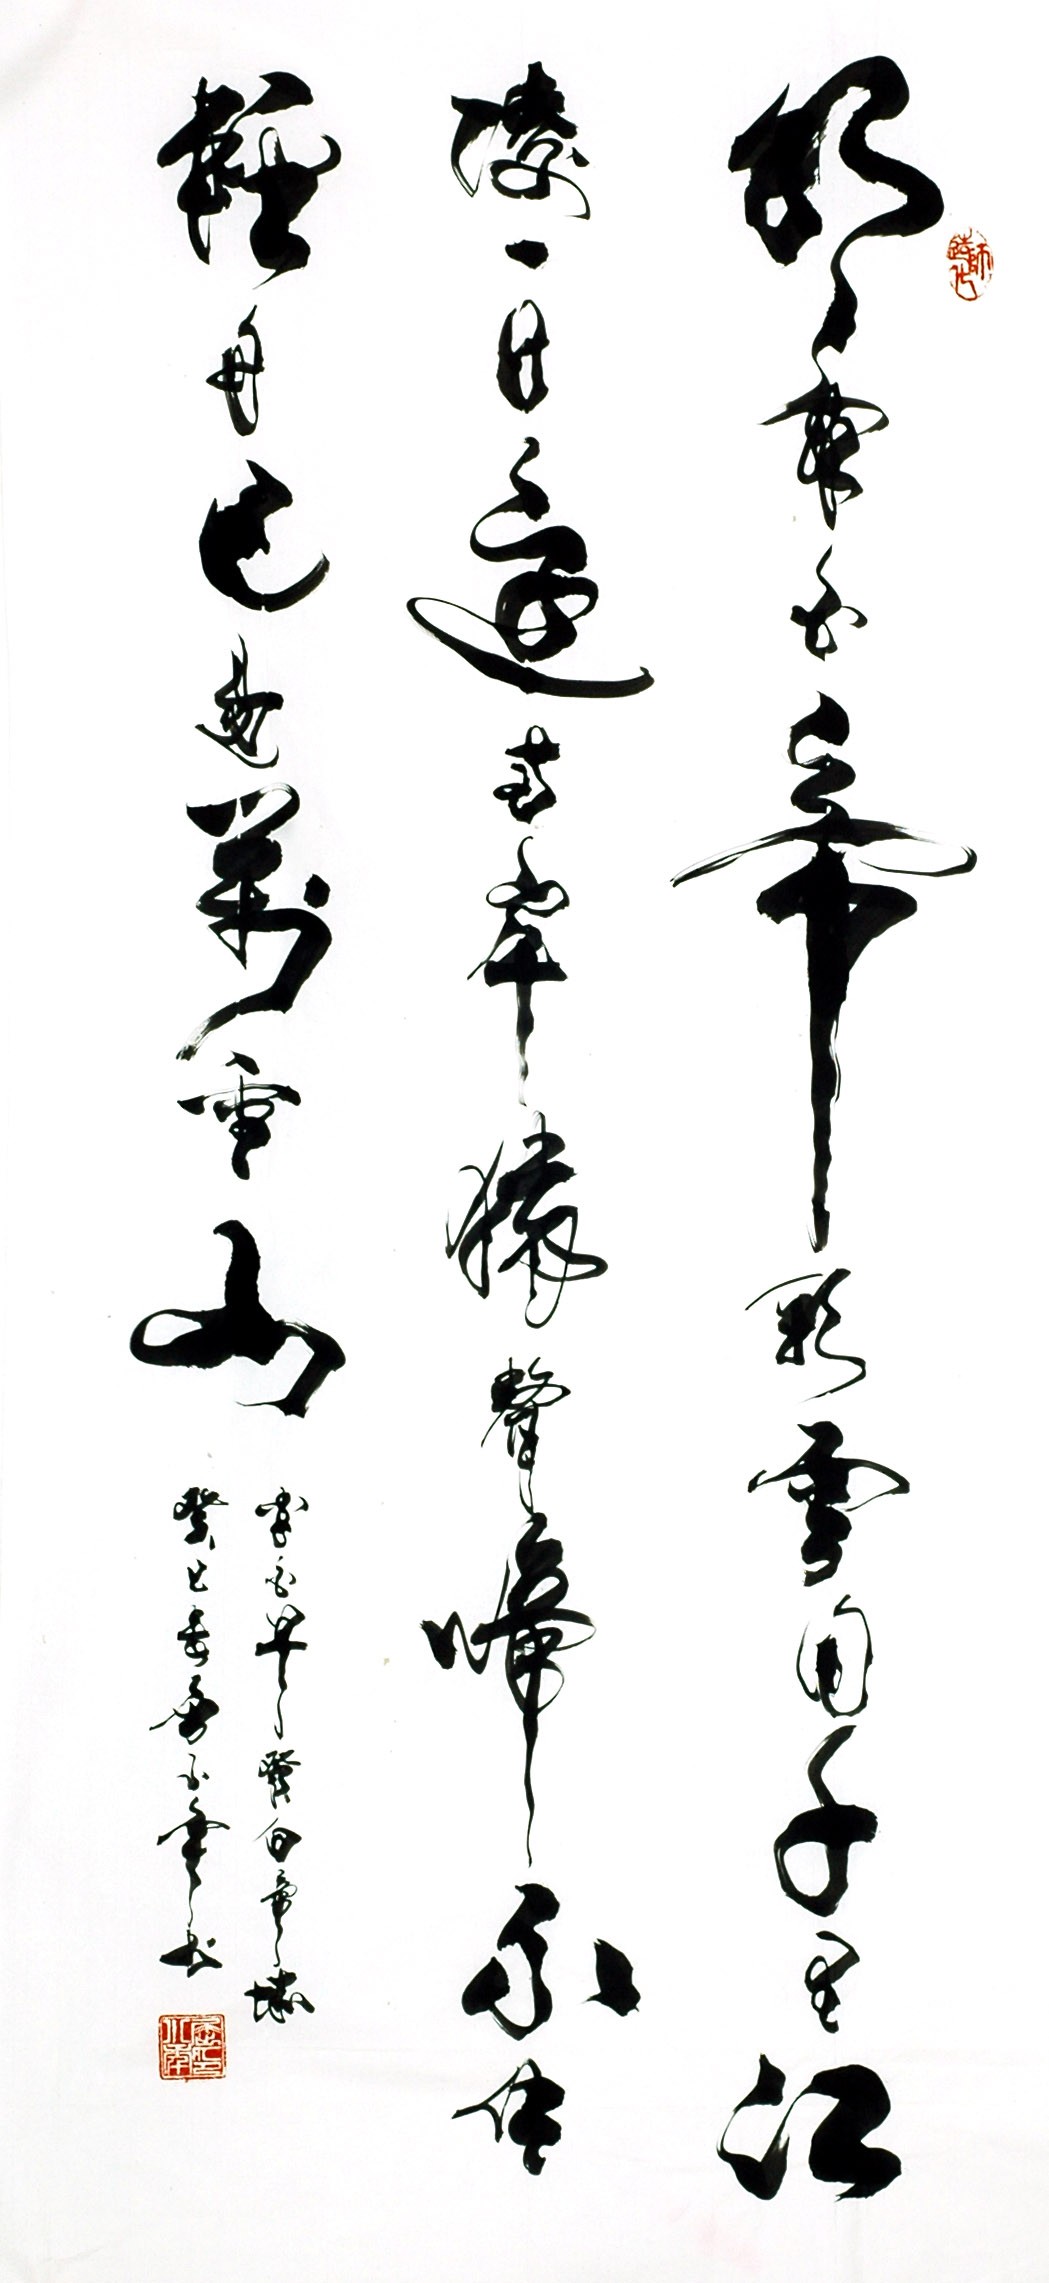 Chinese Cursive Scripts Painting - CNAG009731